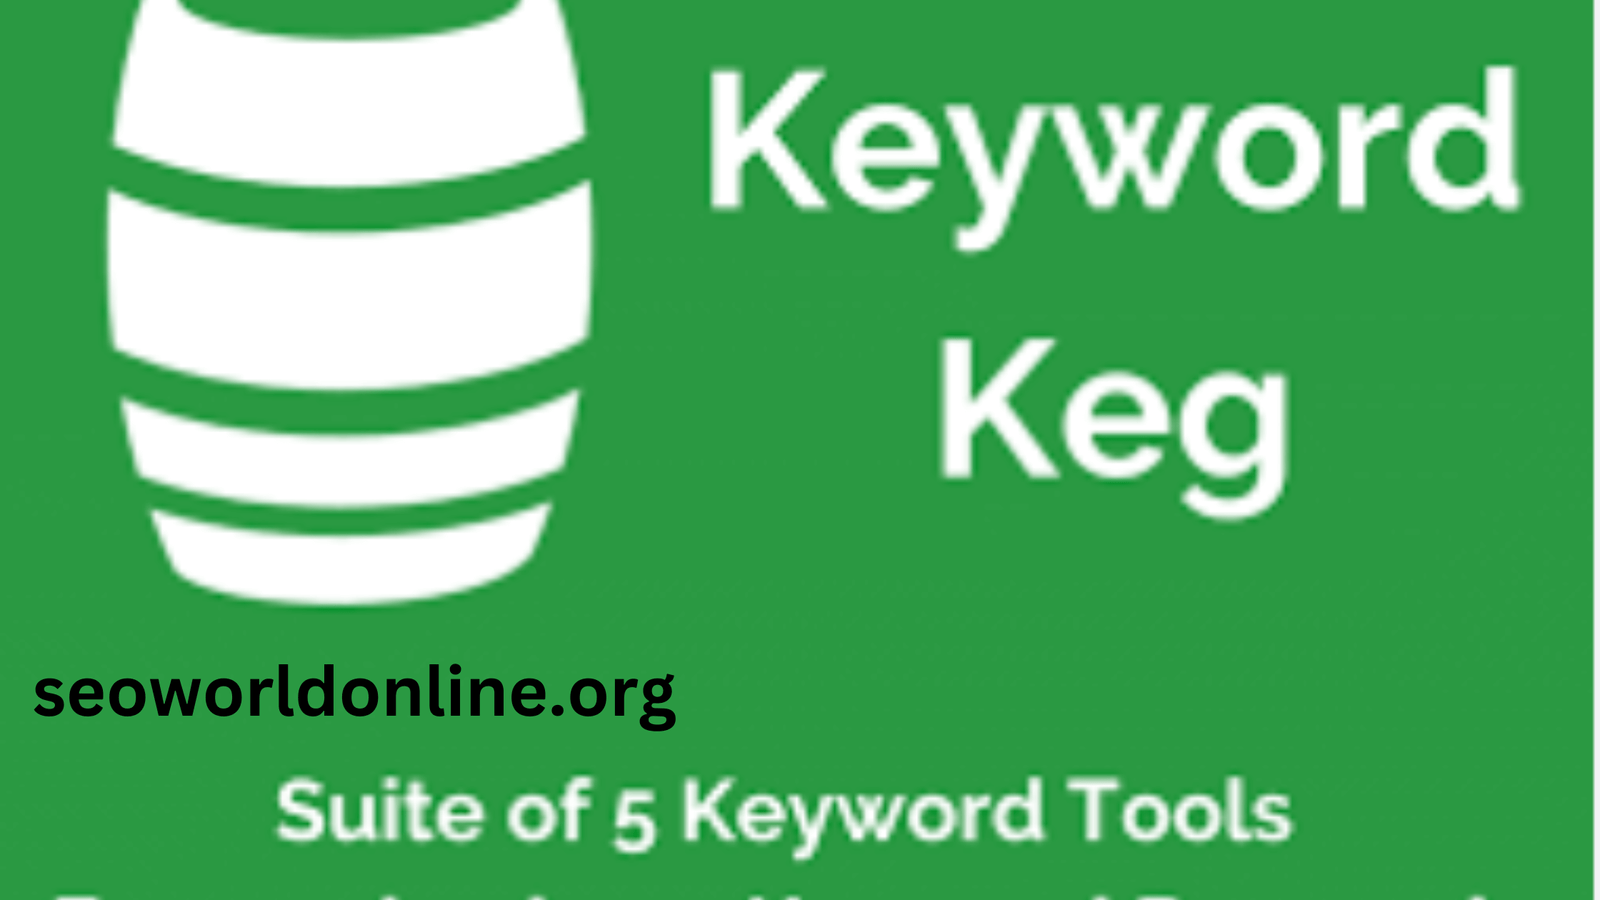 Why Should you try Keyword Keg- Seoworldonline